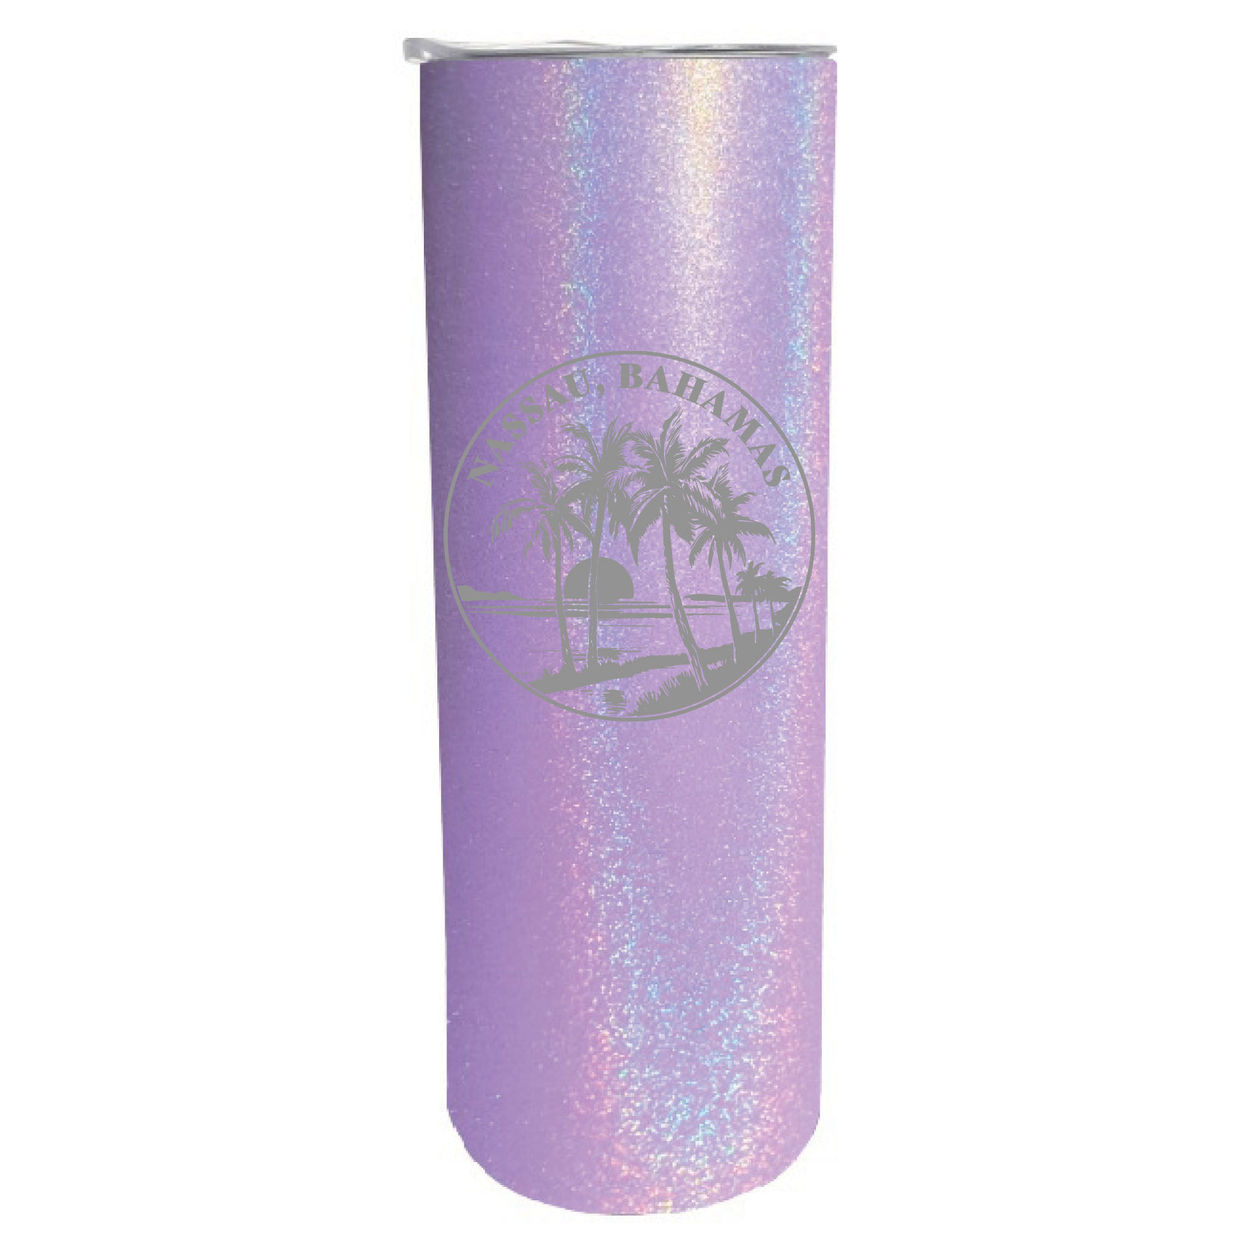 Nassau The Bahamas Souvenir 20 Oz Engraved Insulated Stainless Steel Skinny Tumbler - Purple Glitter,,Single Unit